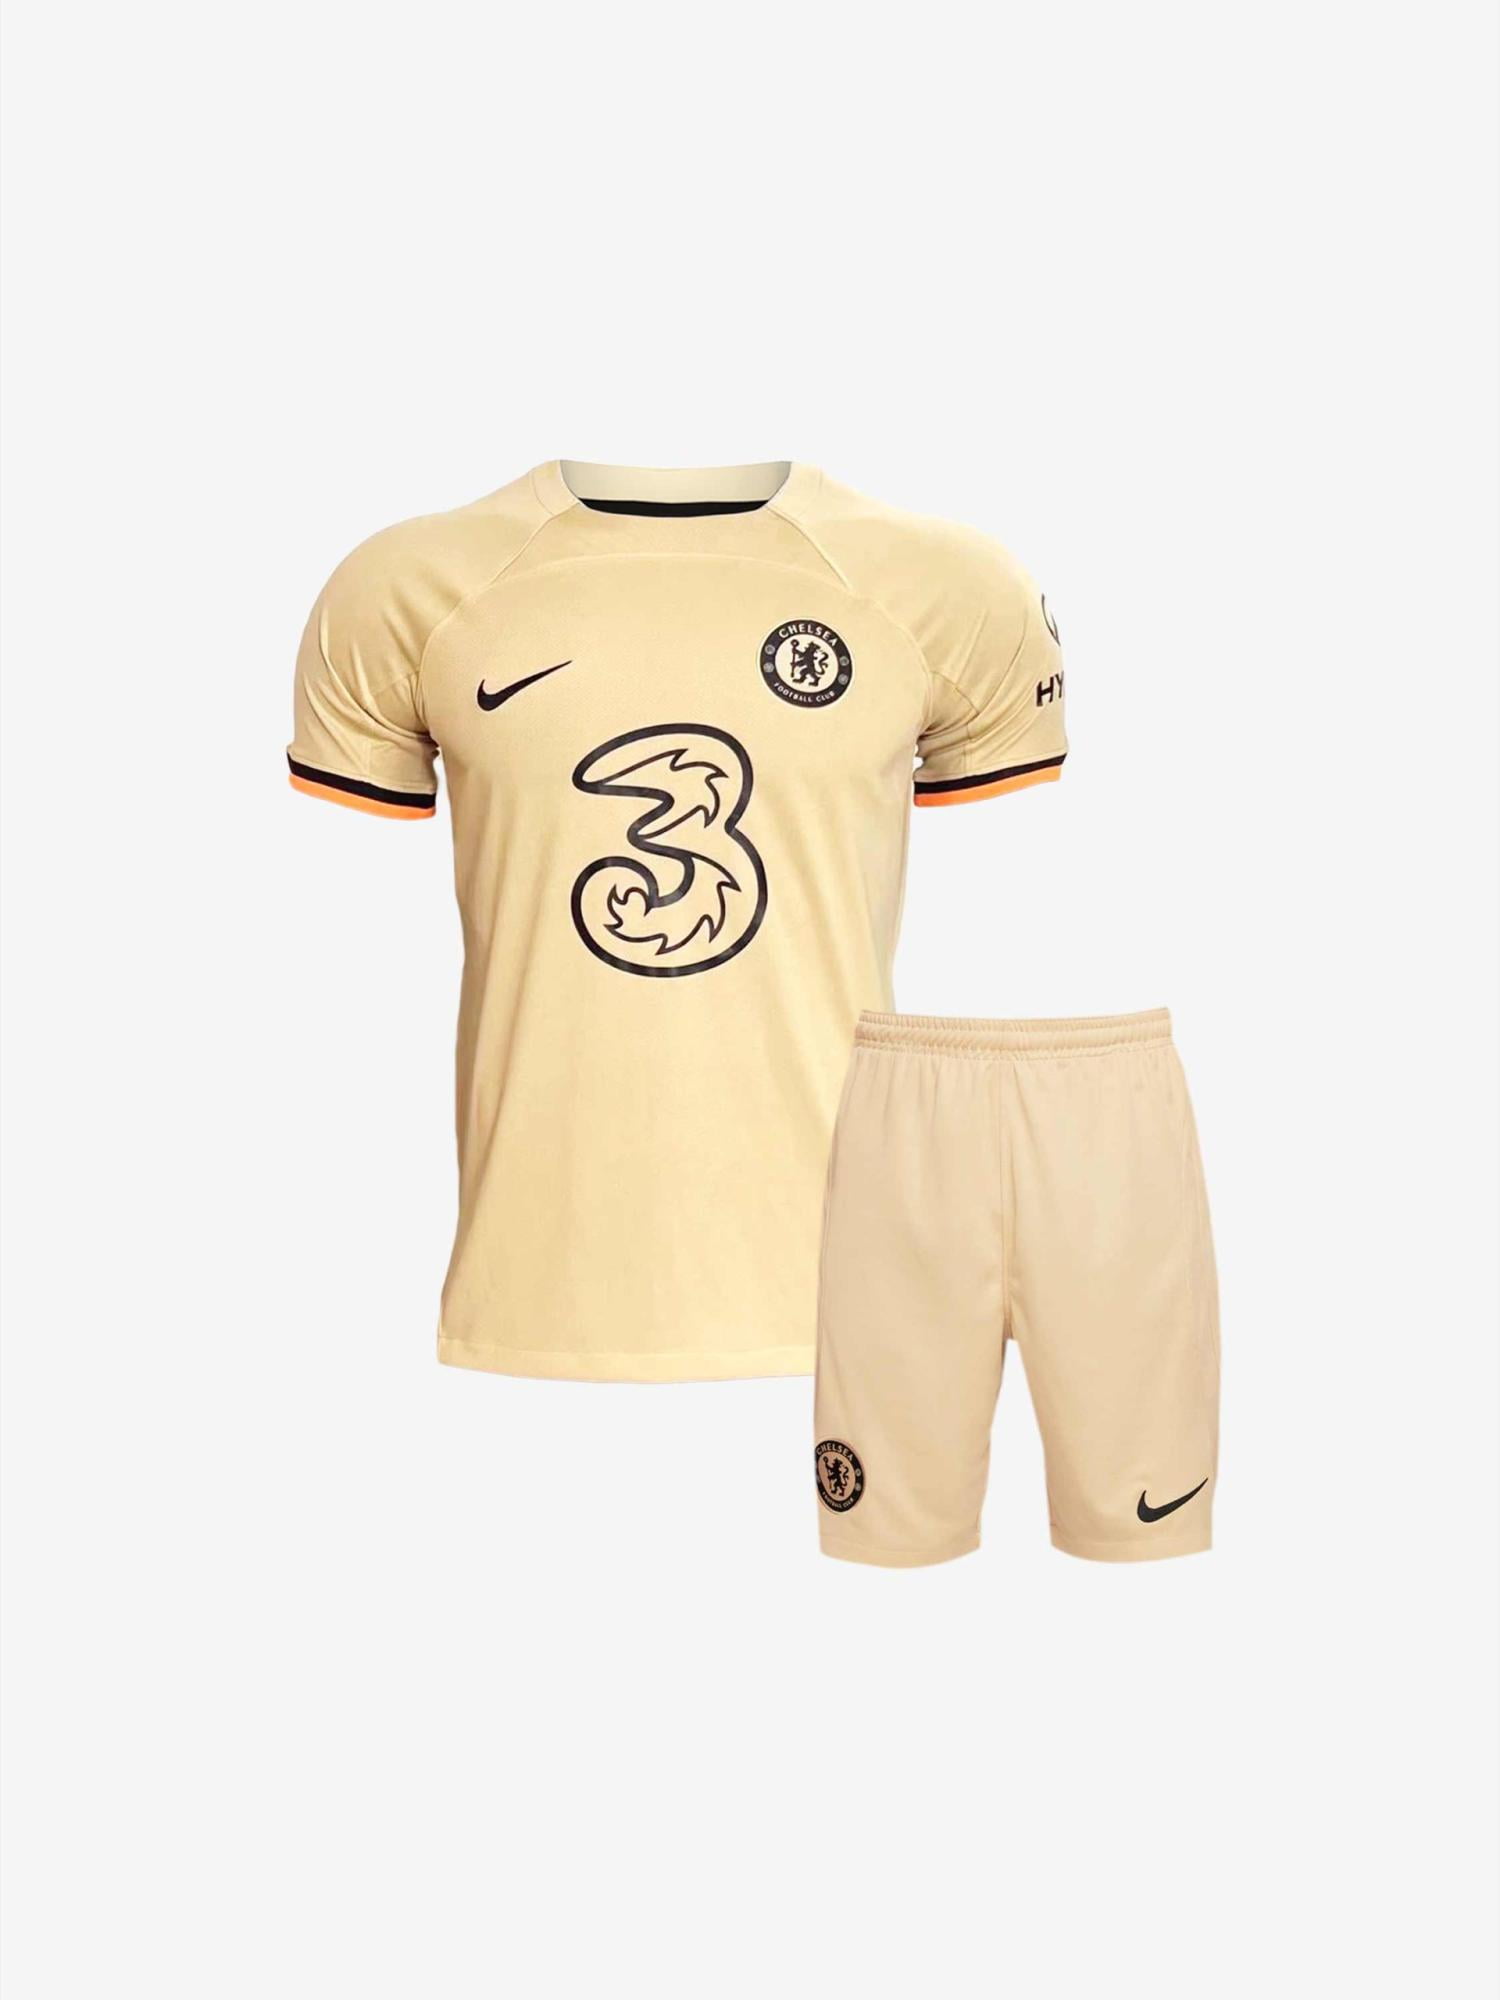 Kids-Chelsea-Third-Football-Jersey-And-Shorts-22-23-Season